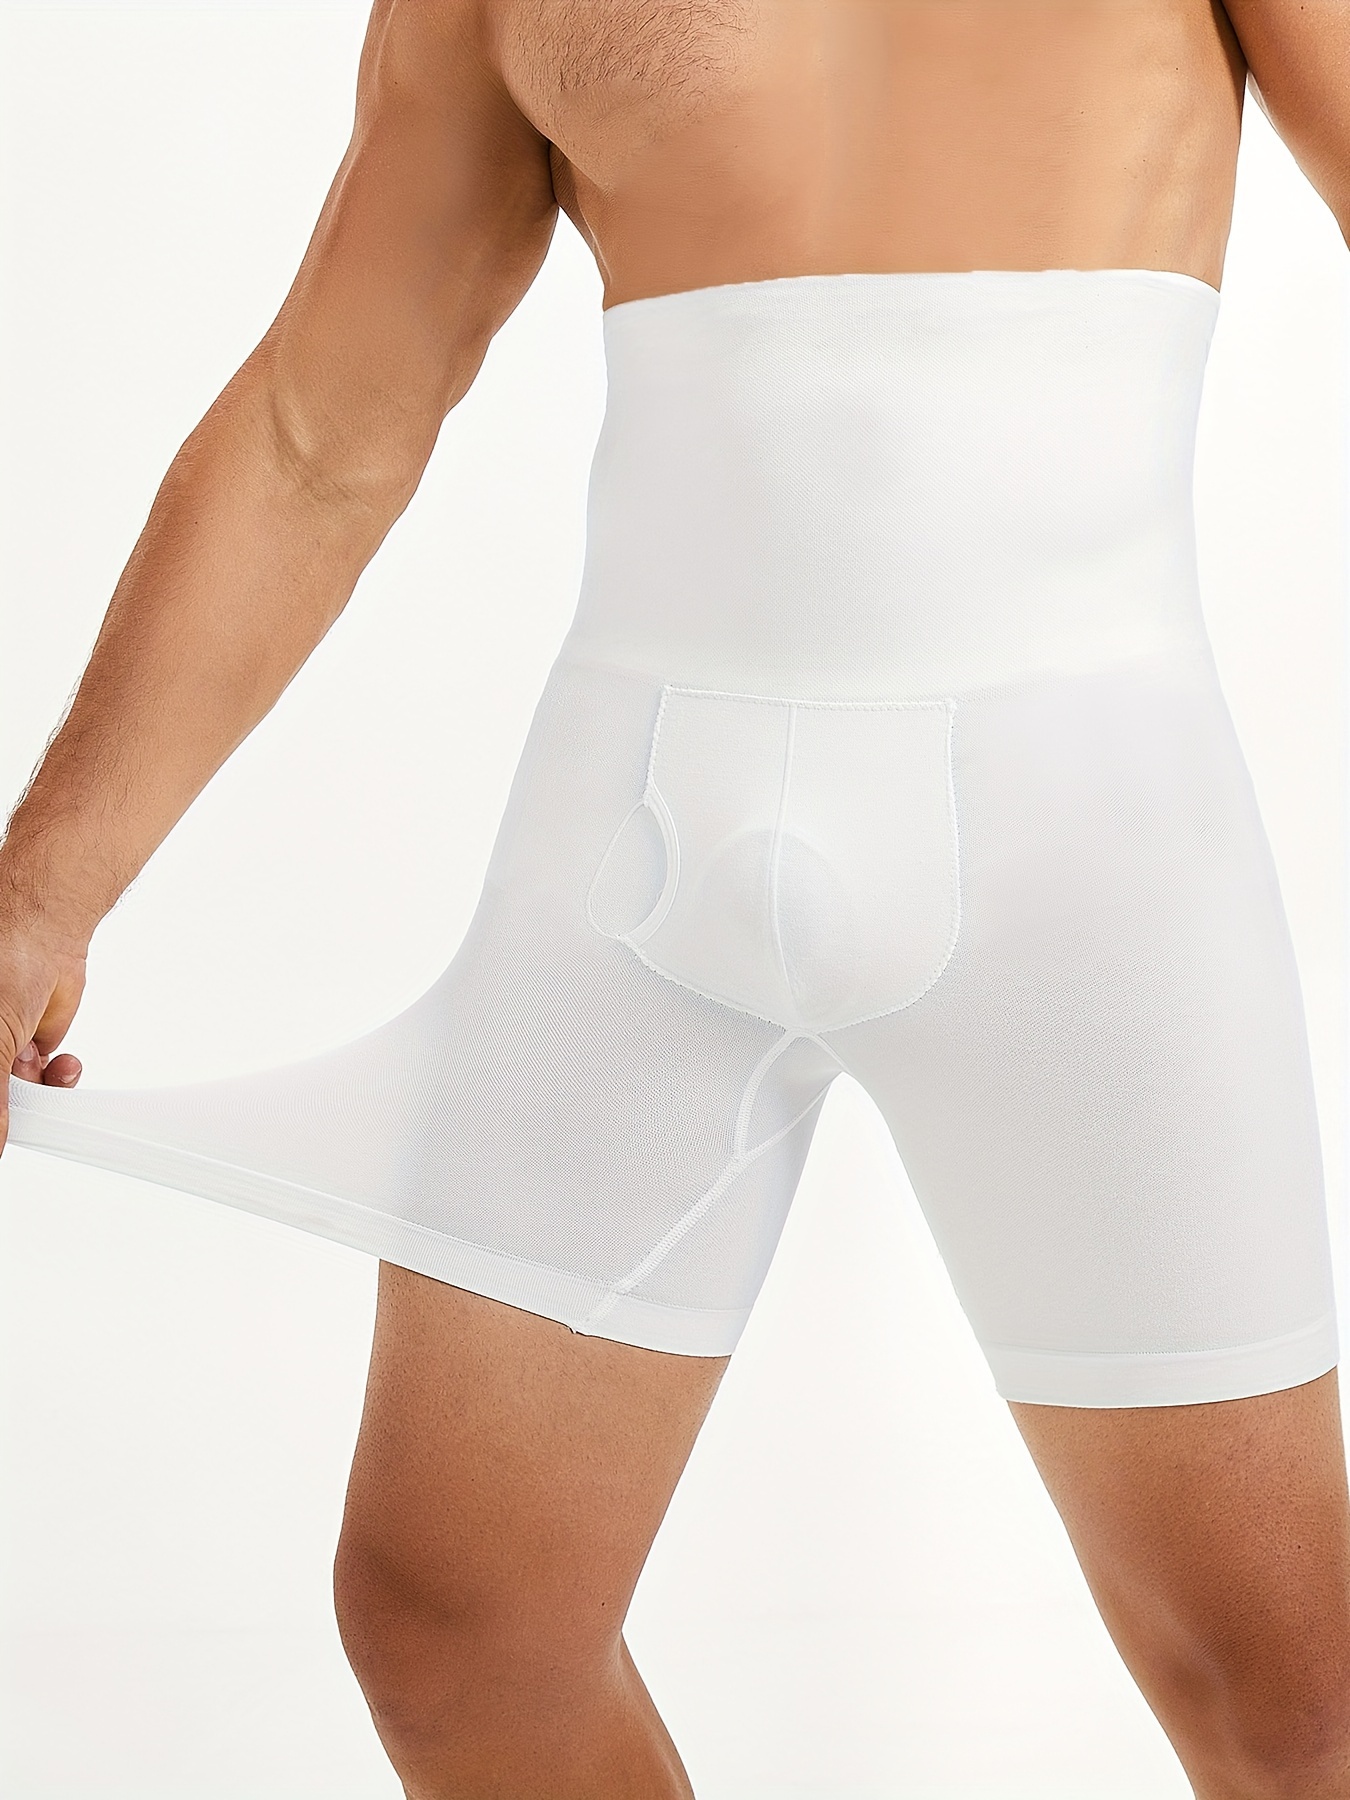 Men Boxer Briefs Belly Control Panties High Waist Shorts Slimming